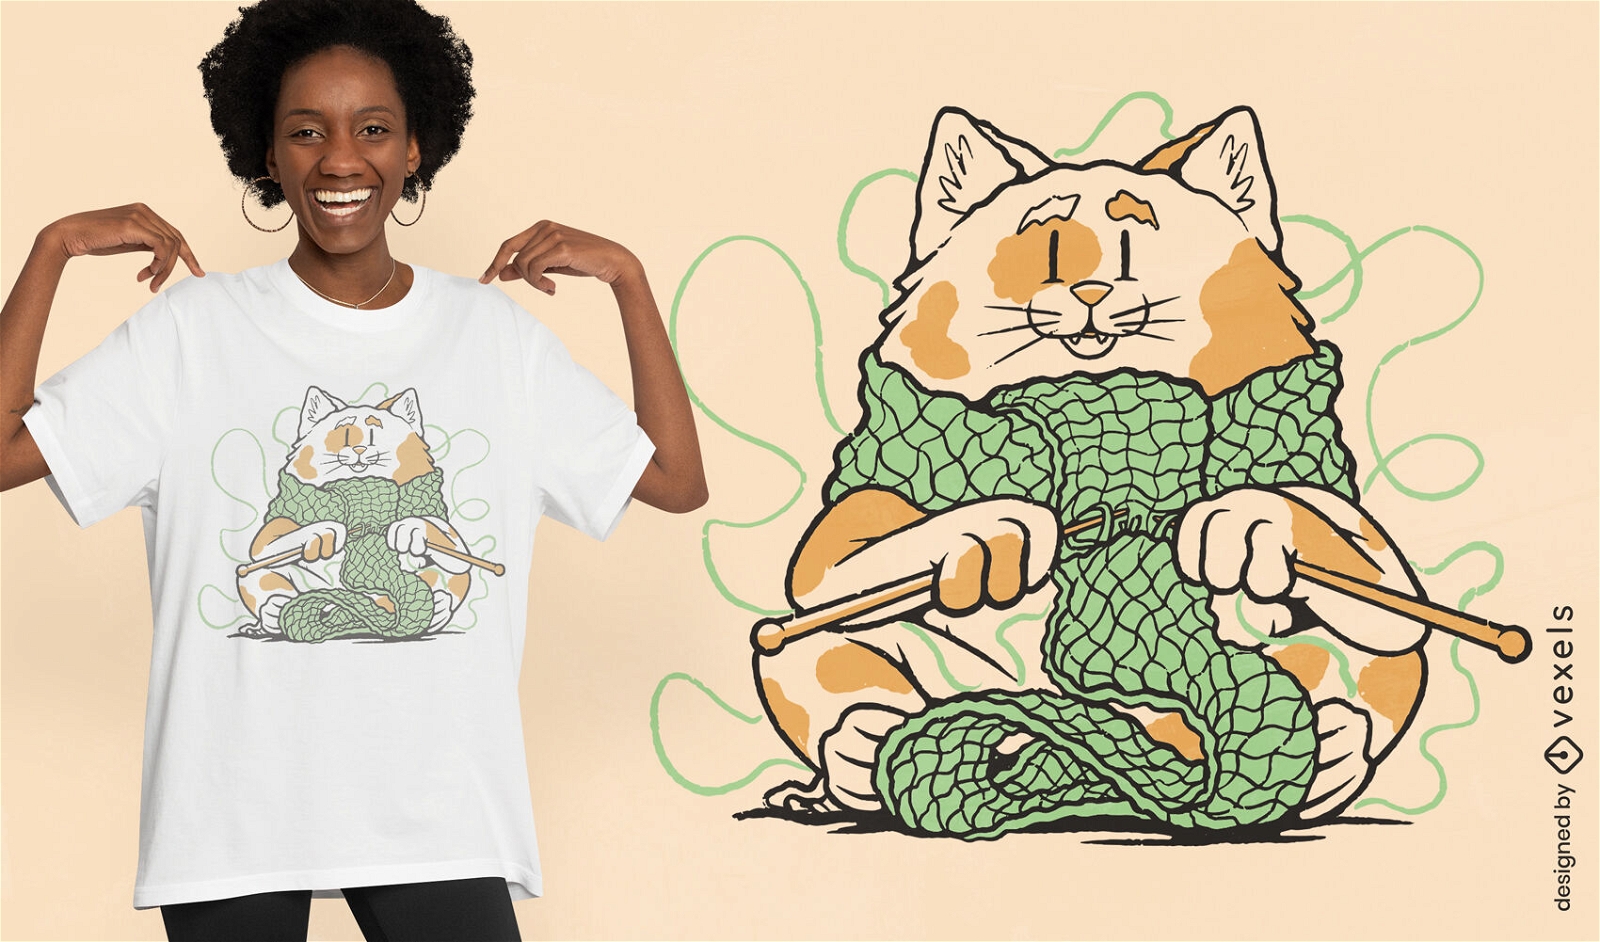 Cat animal knitting scarf t-shirt design